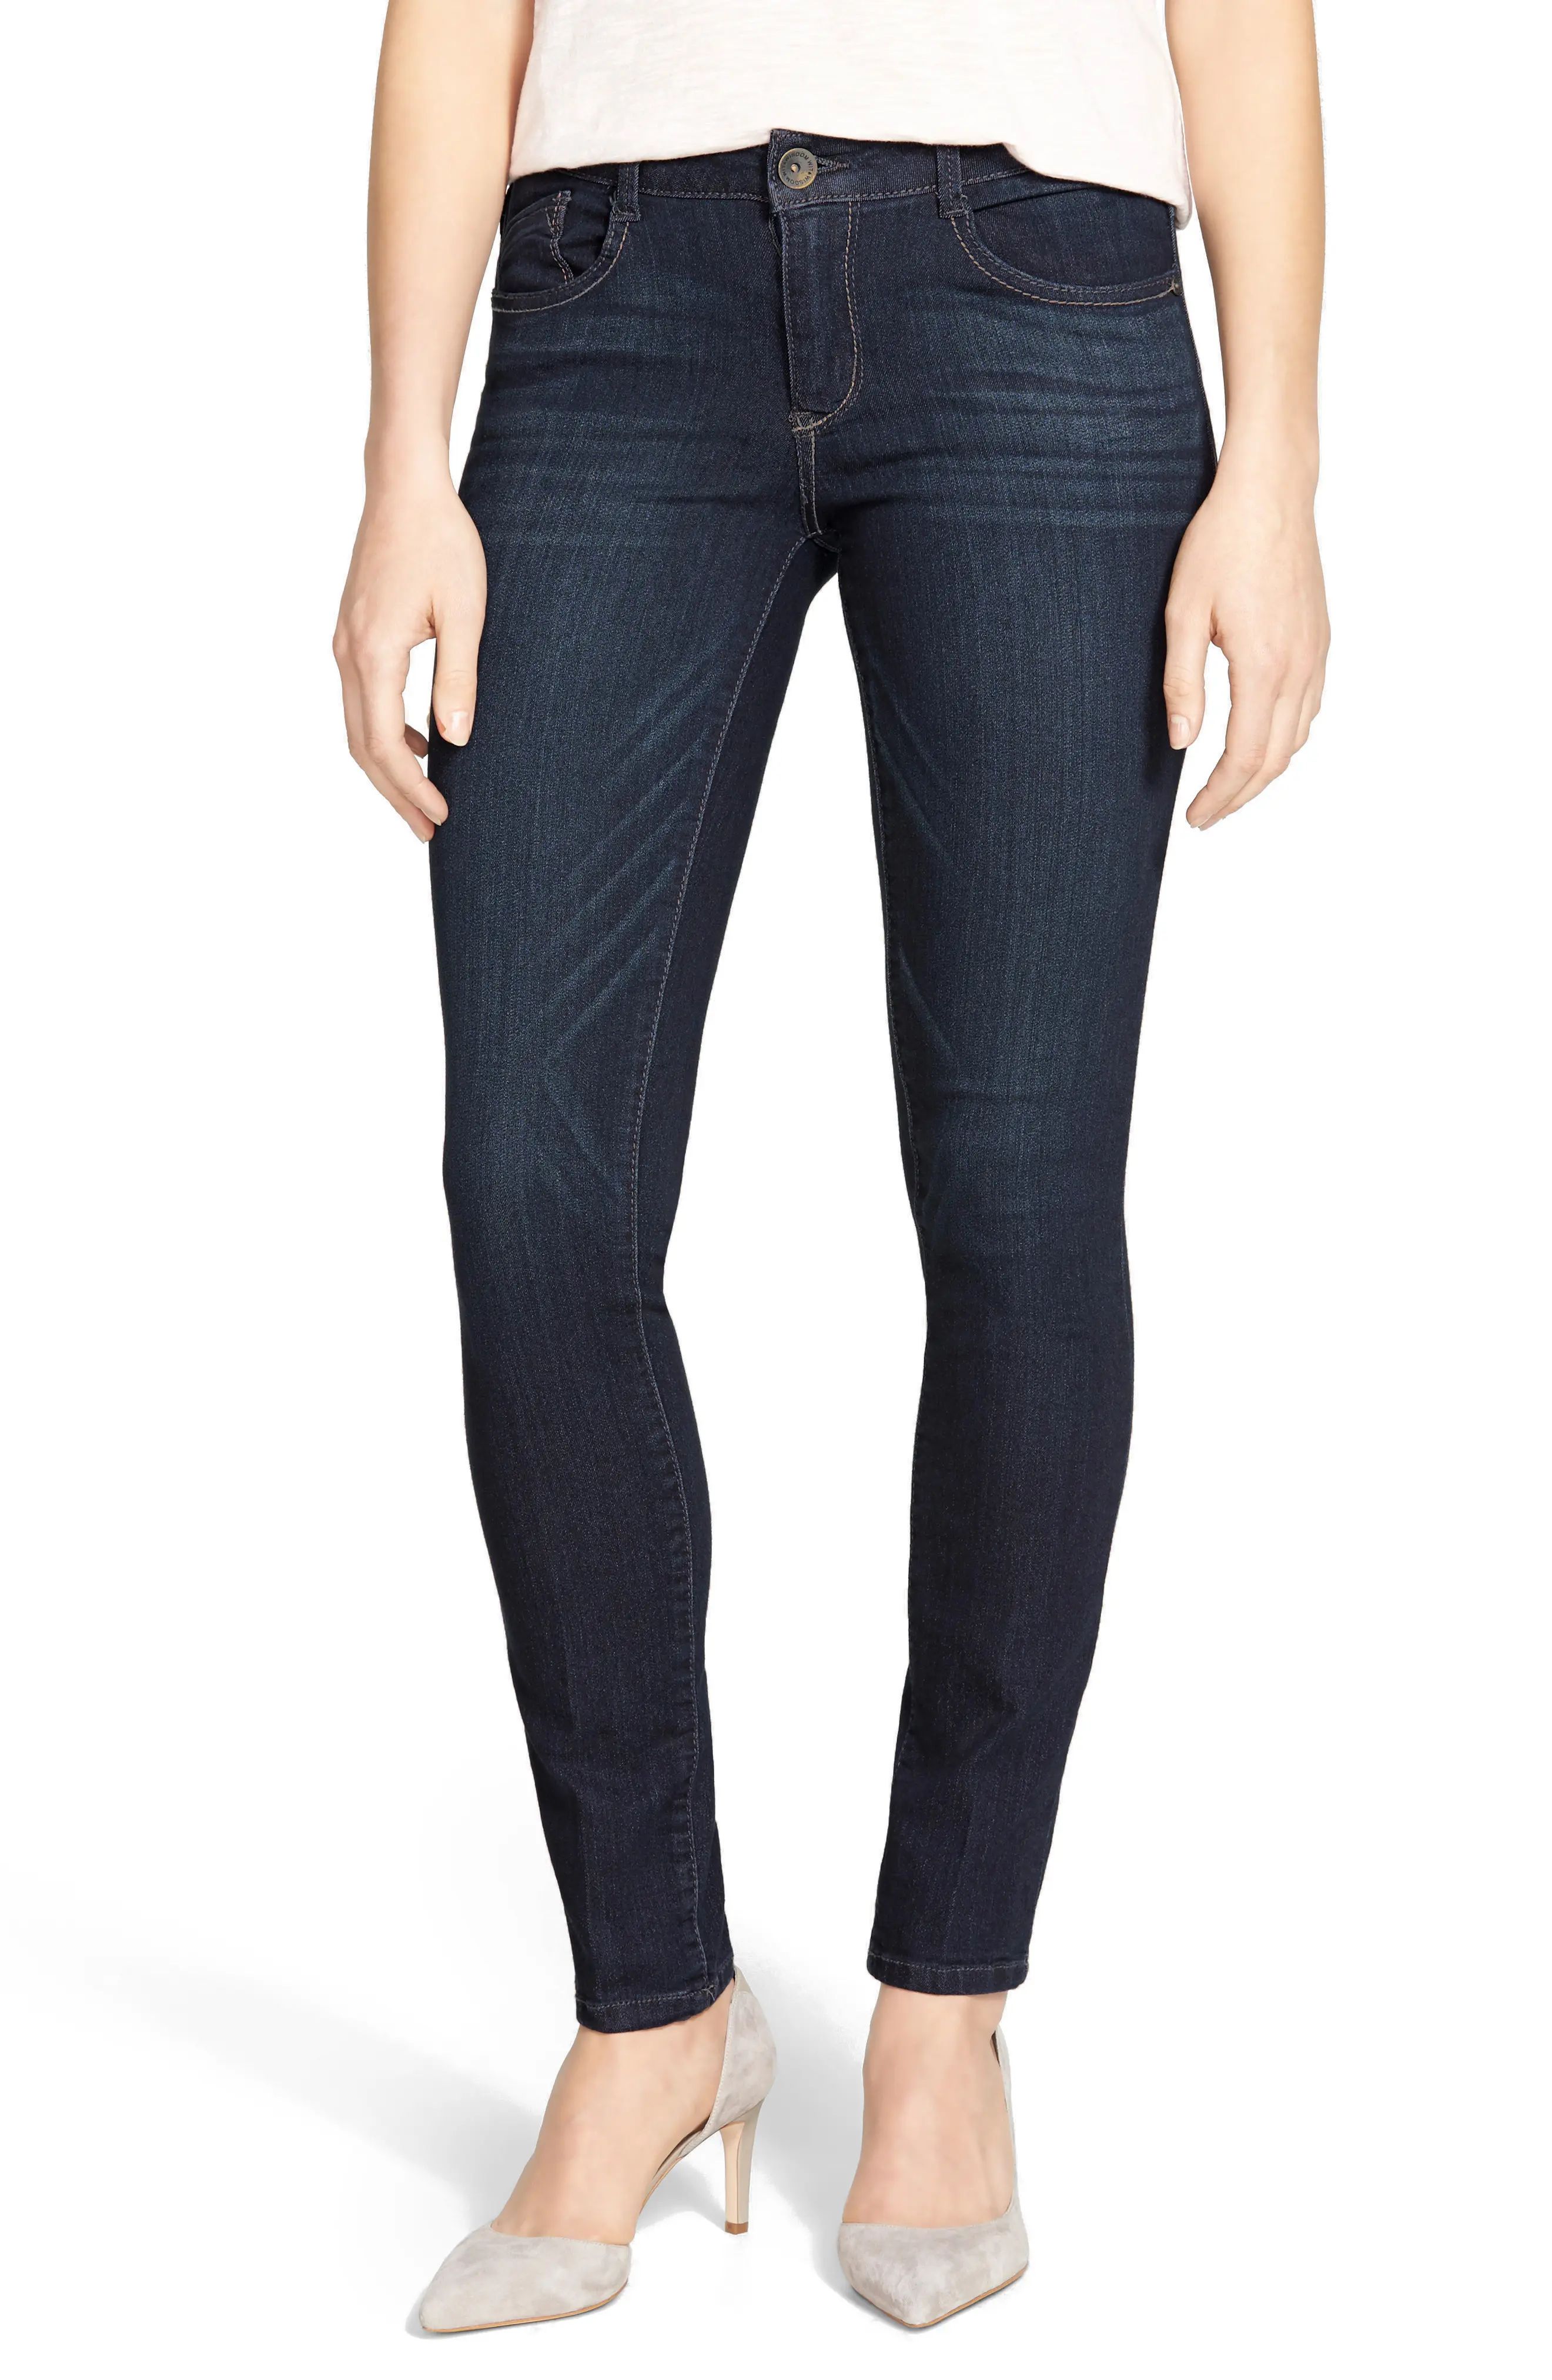 Wit & Wisdom Super Smooth Stretch Denim Skinny Jeans (Dark Navy) (Regular & Petite) (Nordstrom Exclu | Nordstrom